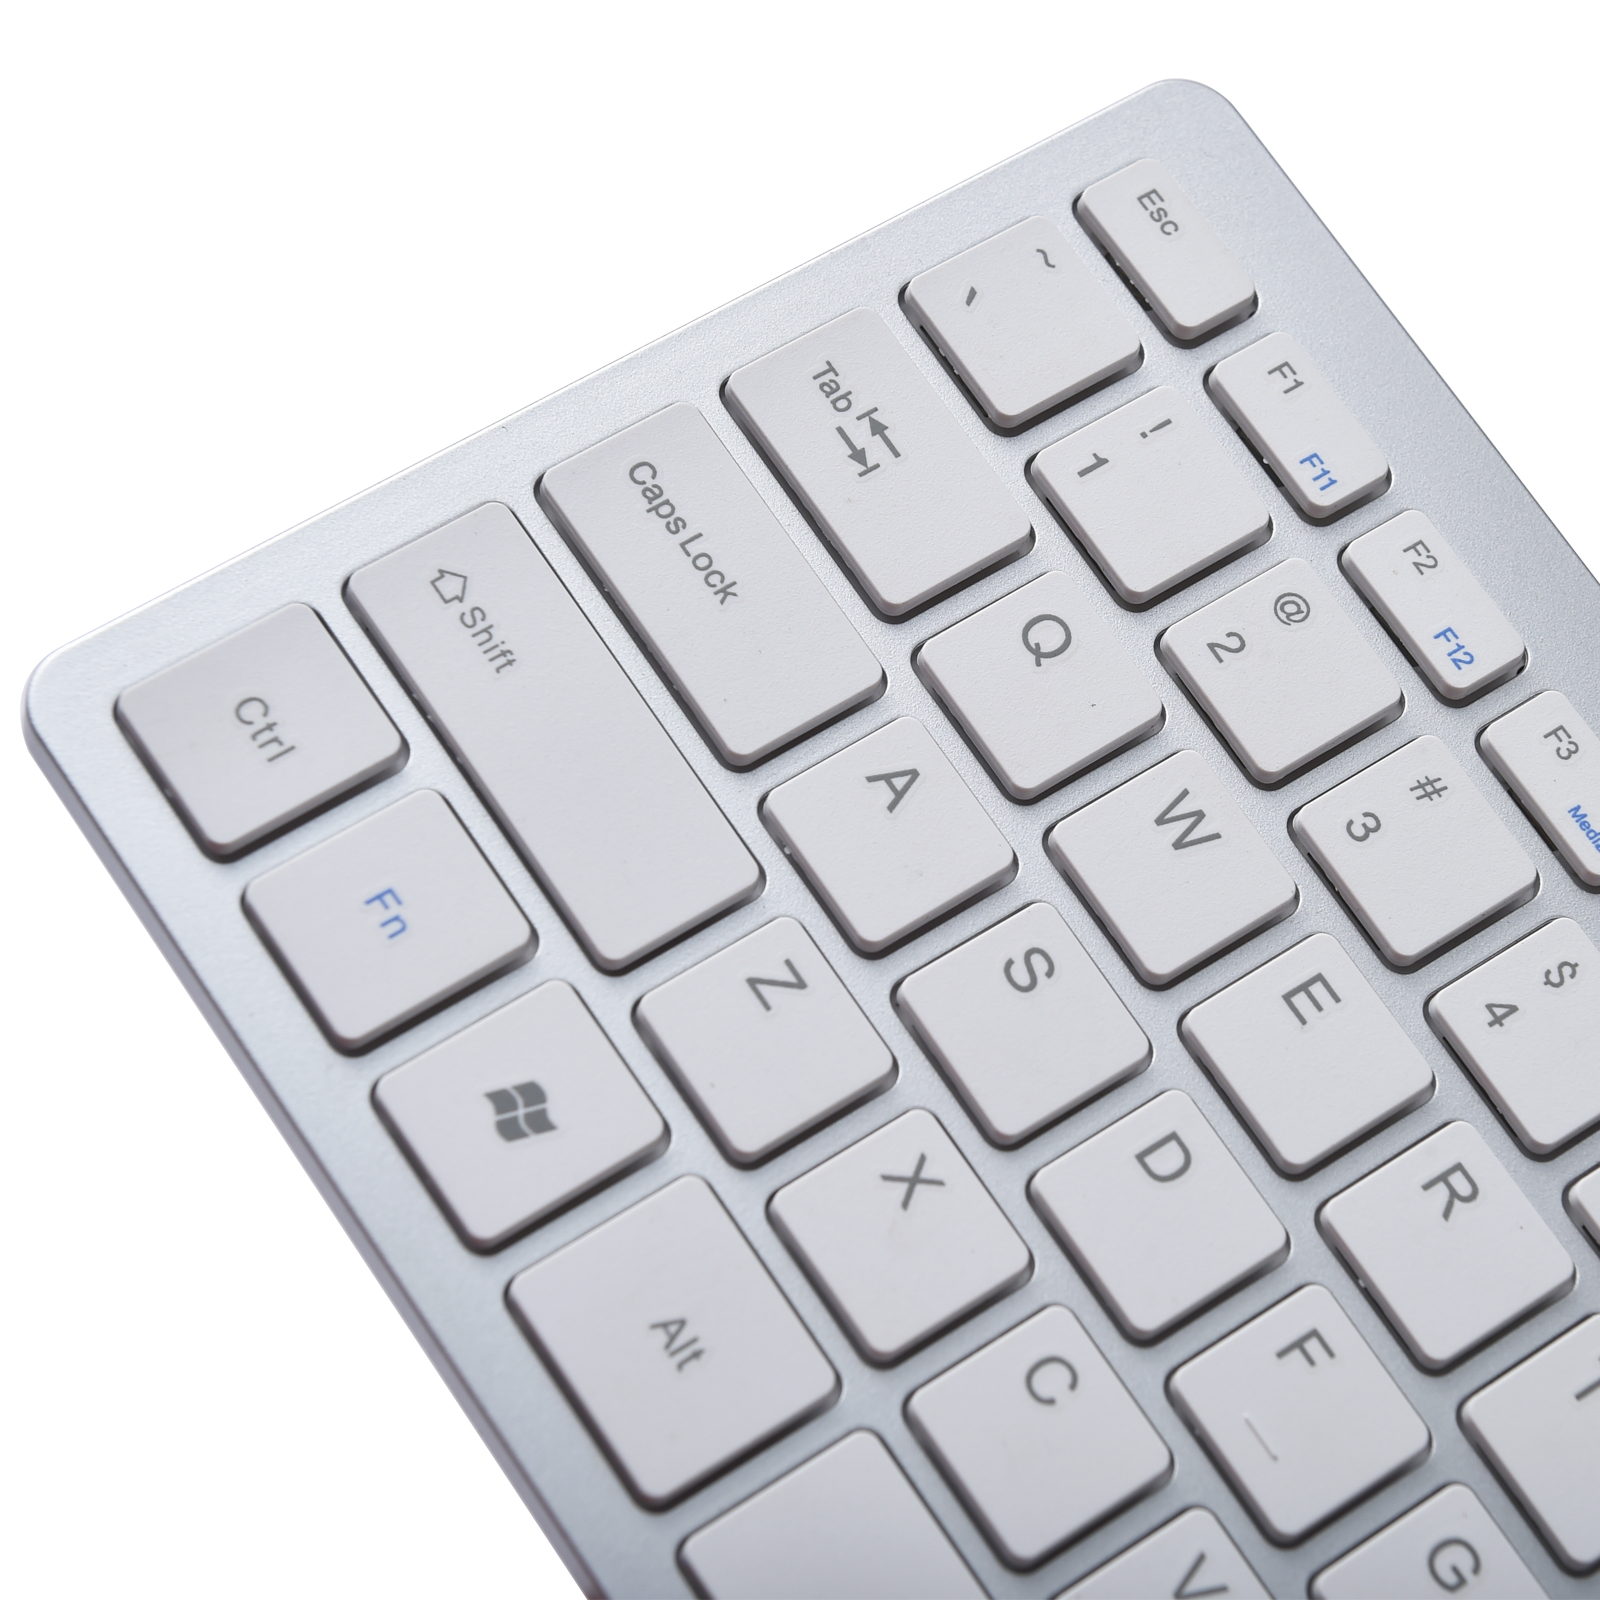 iKKEGOL Mini USB Slim Wired 78-Key Small Compact Keyboard